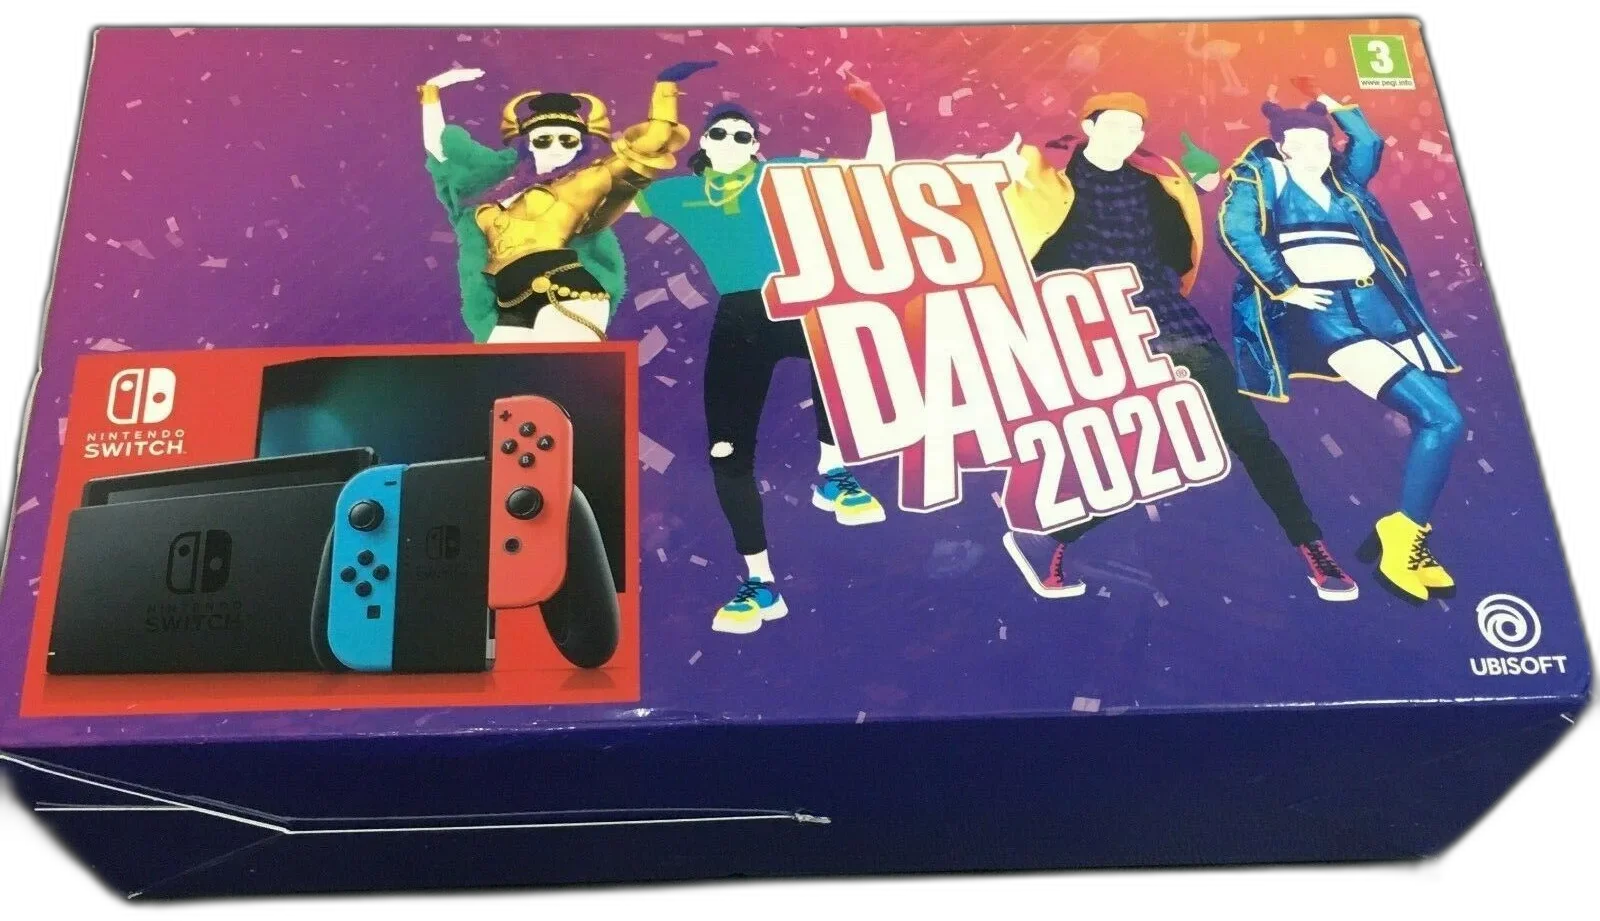  Nintendo Switch Just dance 2020 Console [ESP]